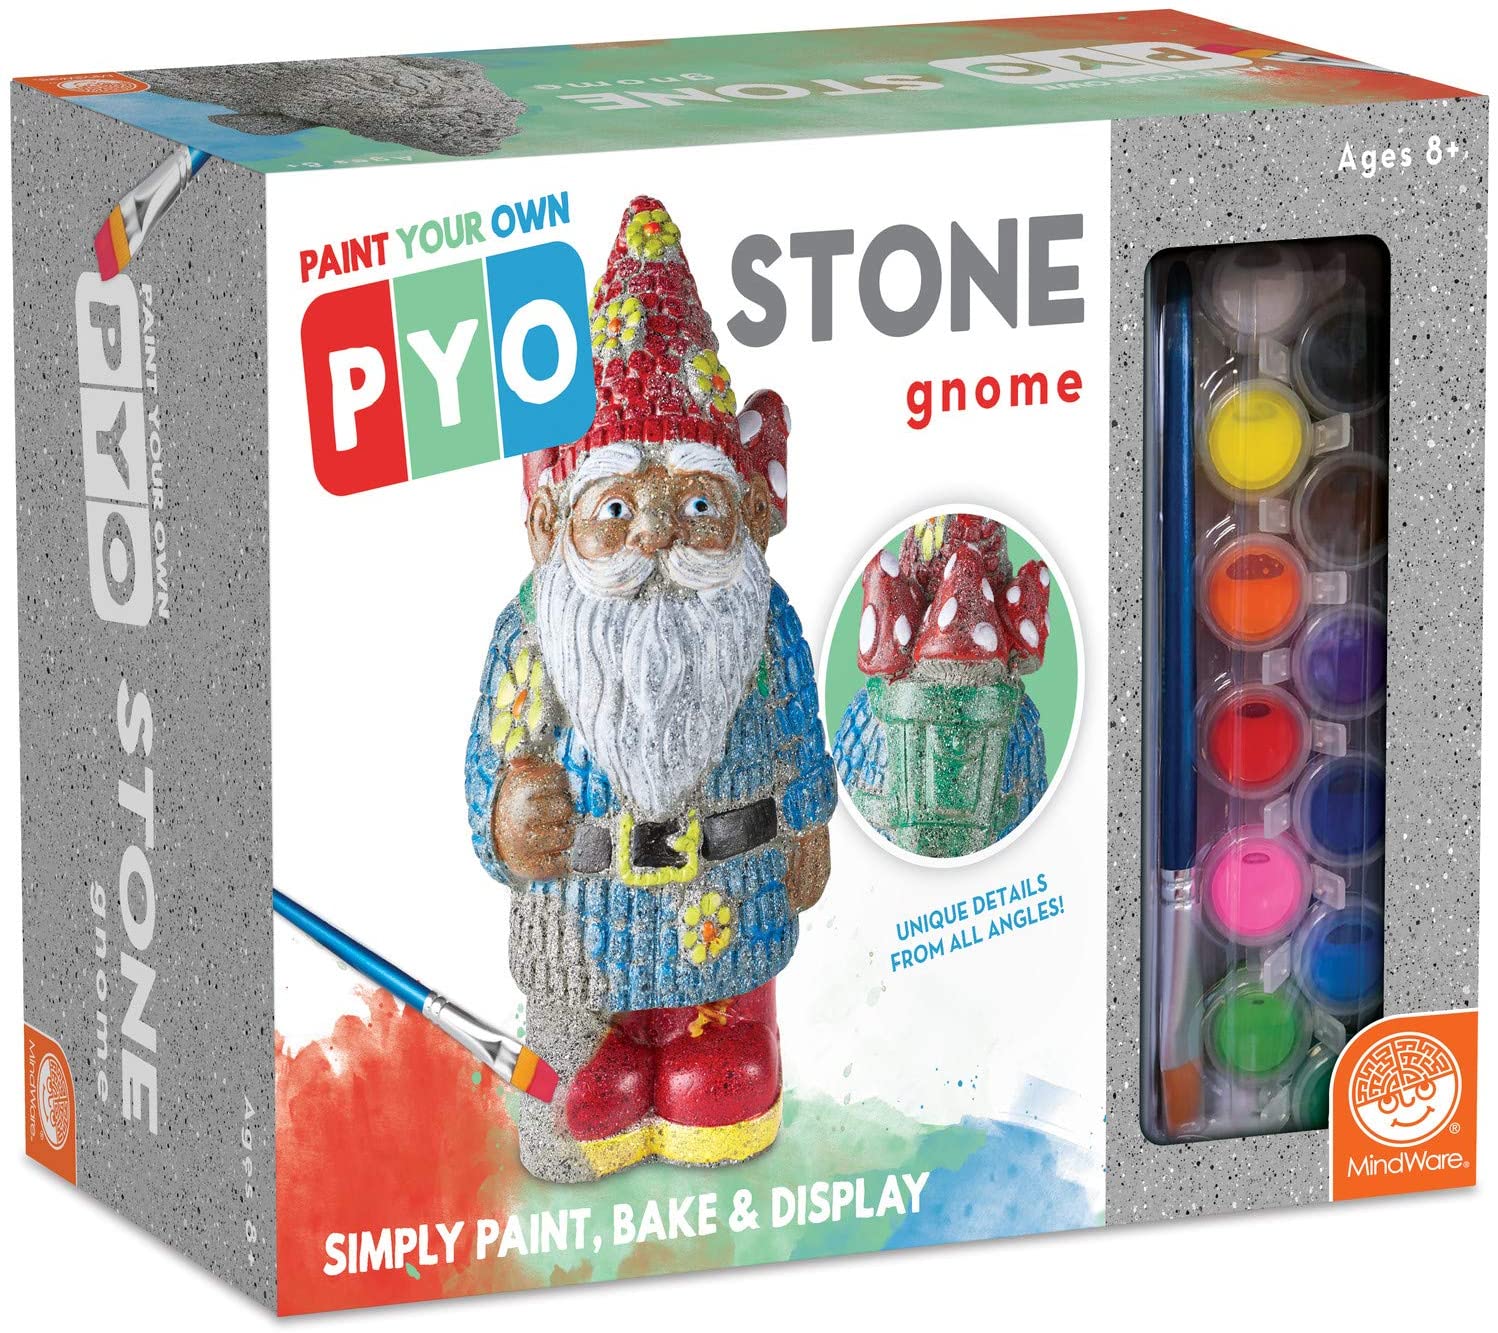 Paint Your Own Stone Gnome - JKA Toys